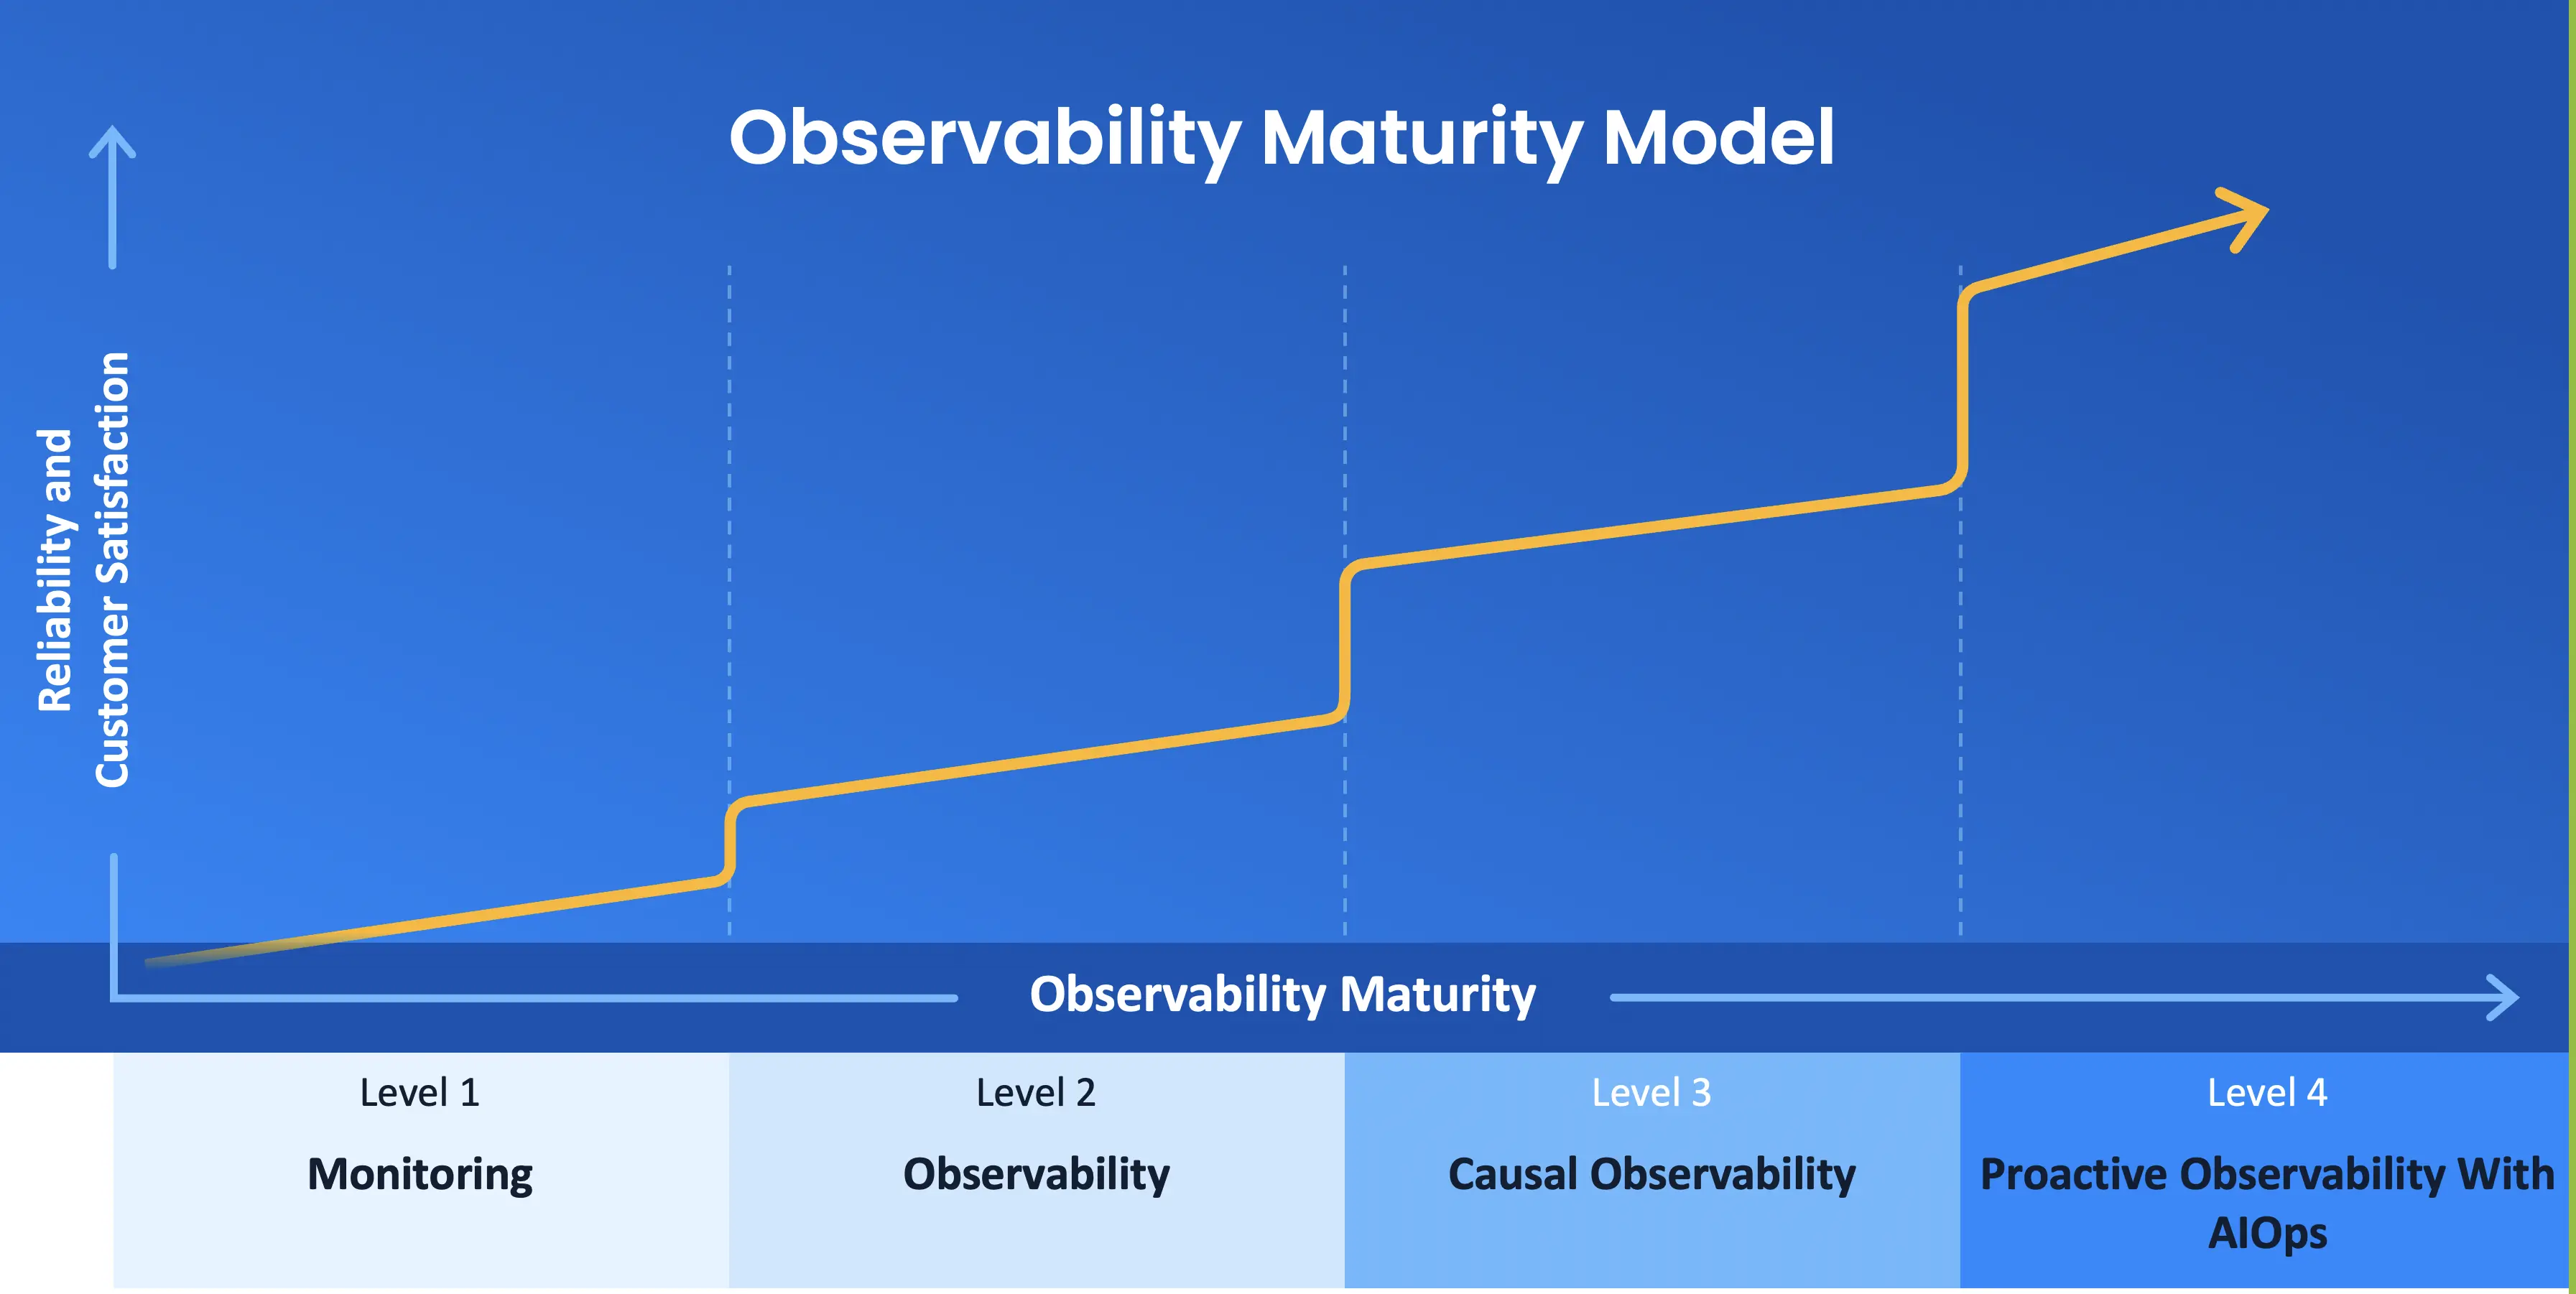 Observability Maturity Model - Levels